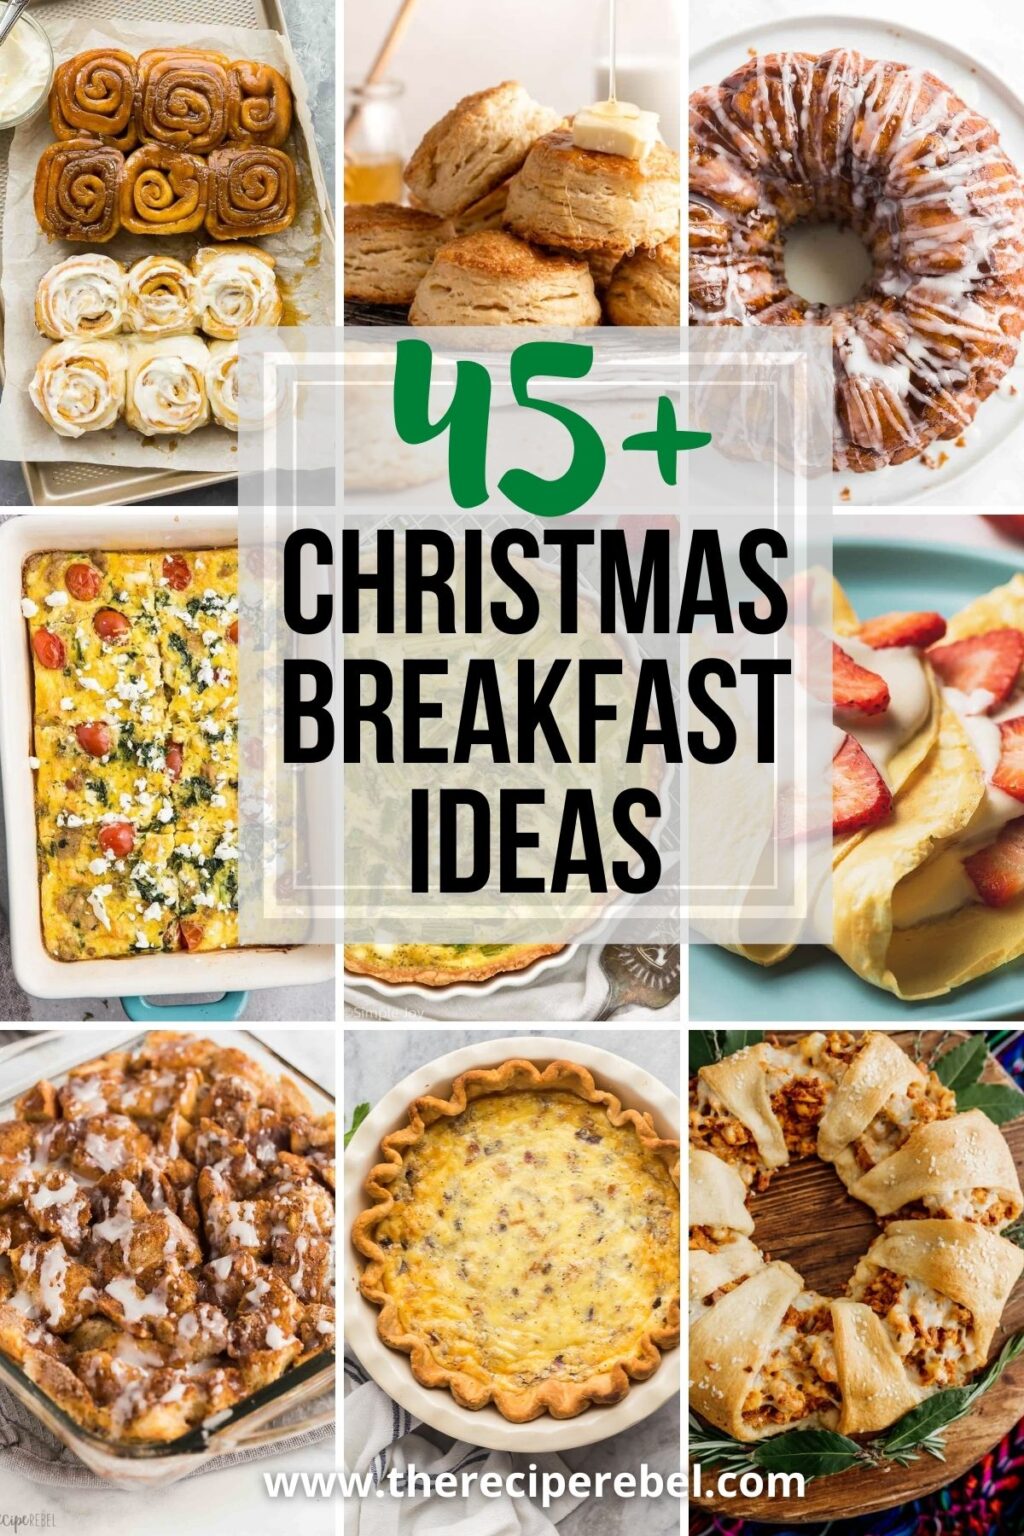 45+ Christmas Breakfast Ideas - The Recipe Rebel